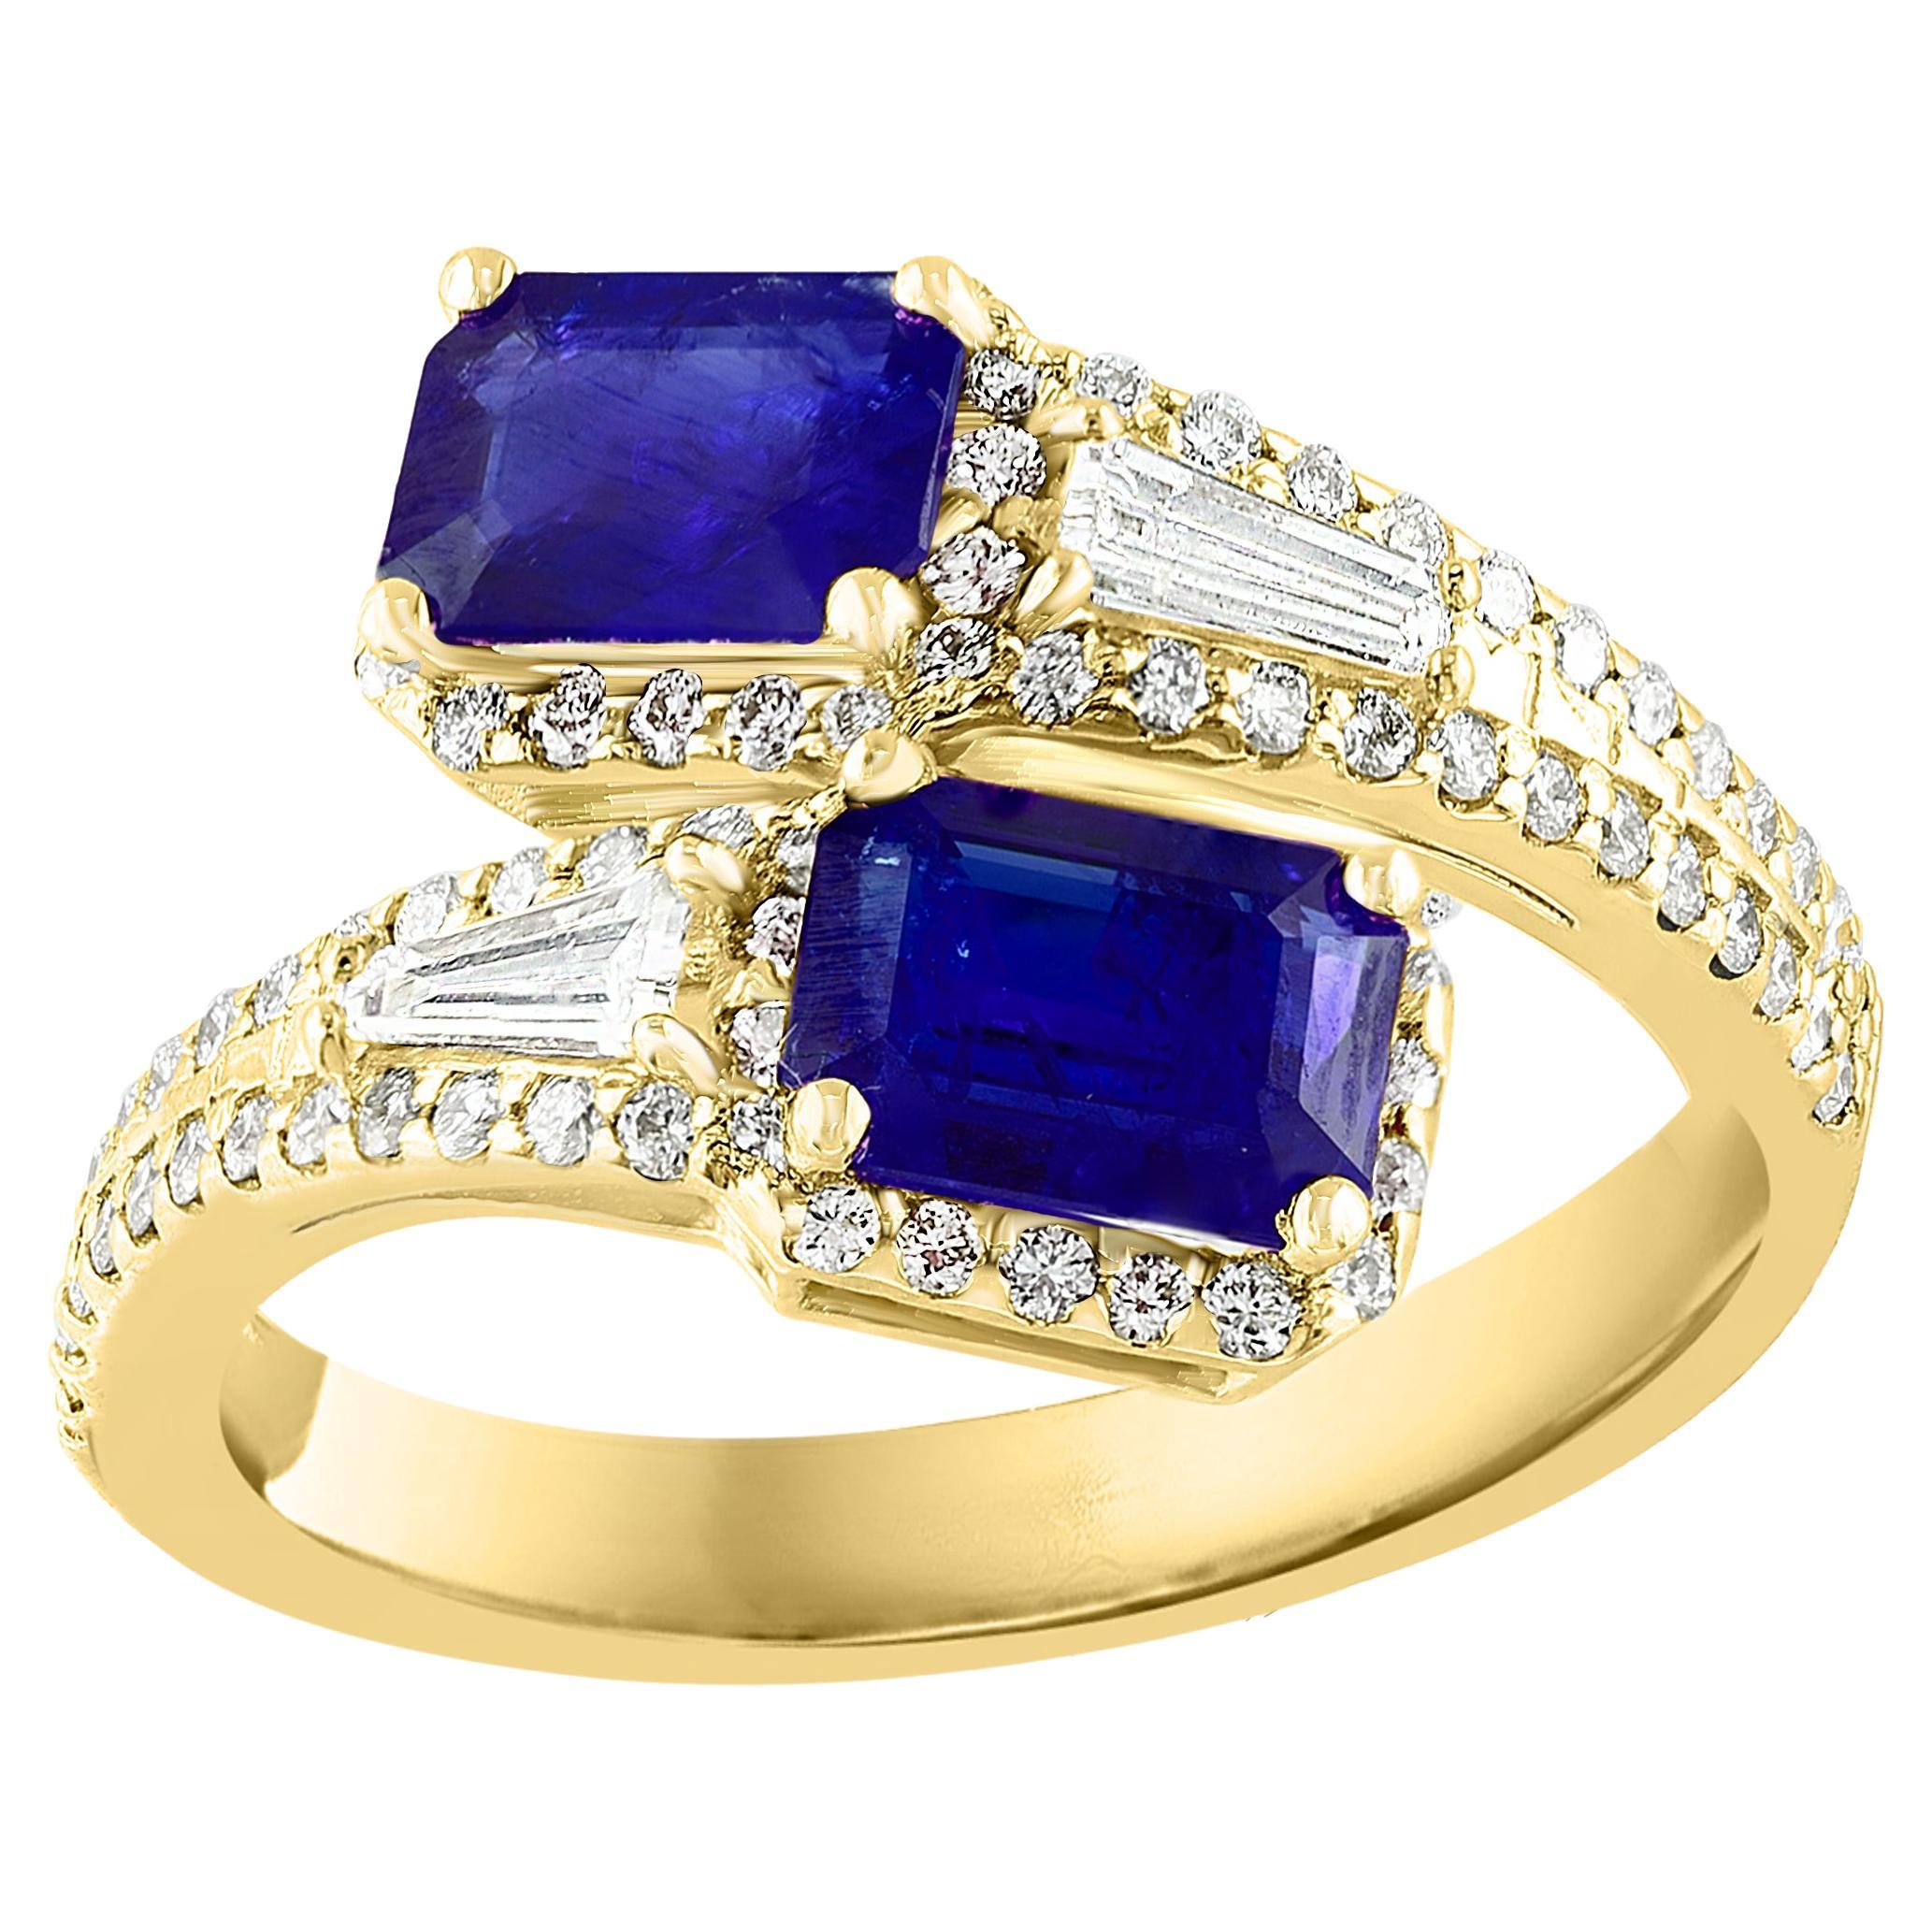 1.84 Carat EmeraldCut Sapphire Diamond Toi Et Moi Engagement Ring 14K YellowGold For Sale